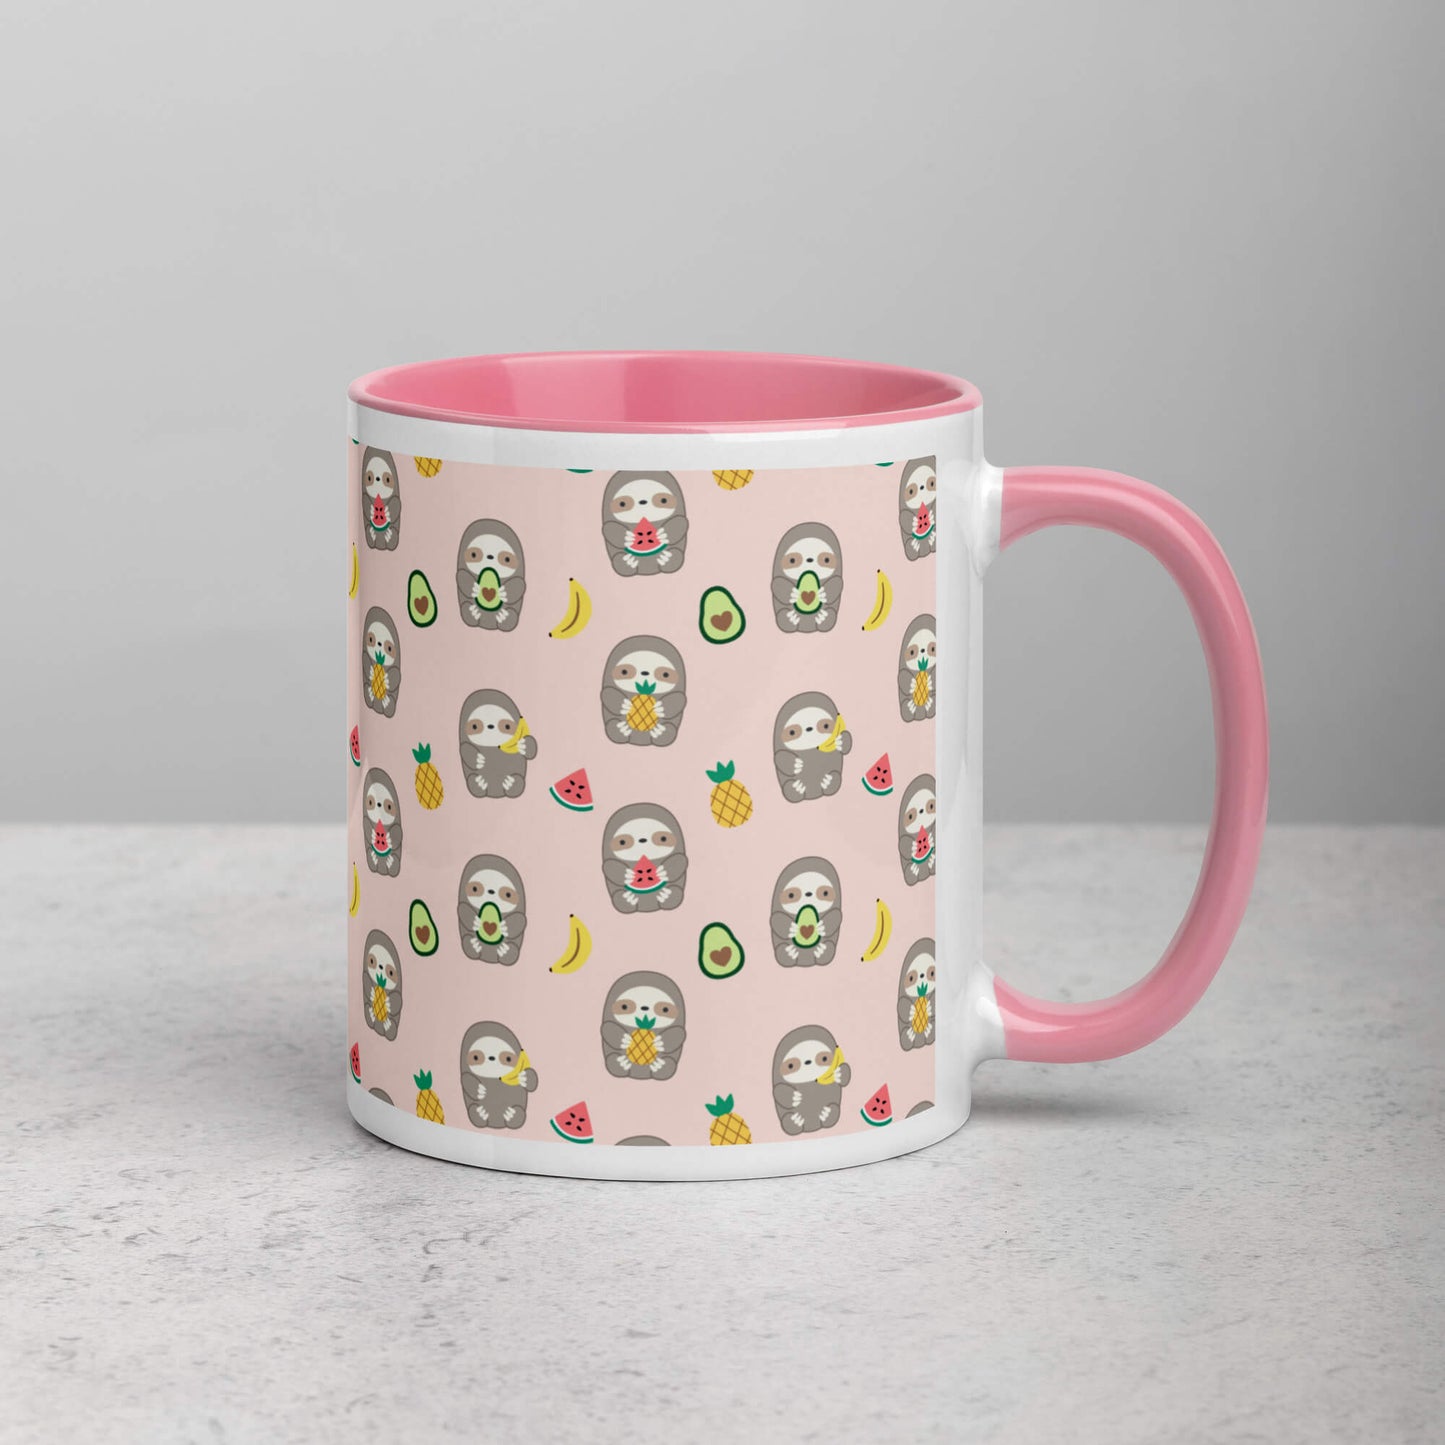 Pink Ceramic Mug with Fruit Sloths - Banana, Watermelon, Pineapple, Avocado